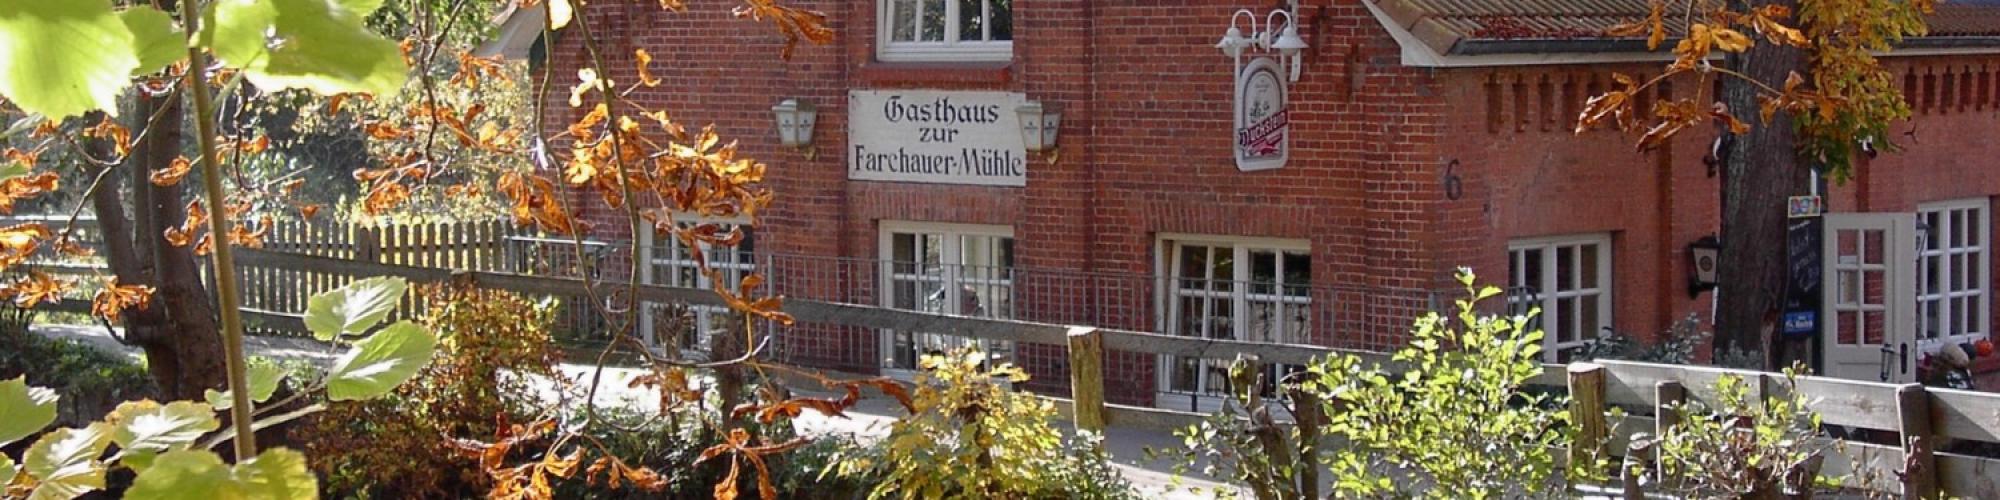 Hotel - Restaurant - Cafe Farchauer Mühle